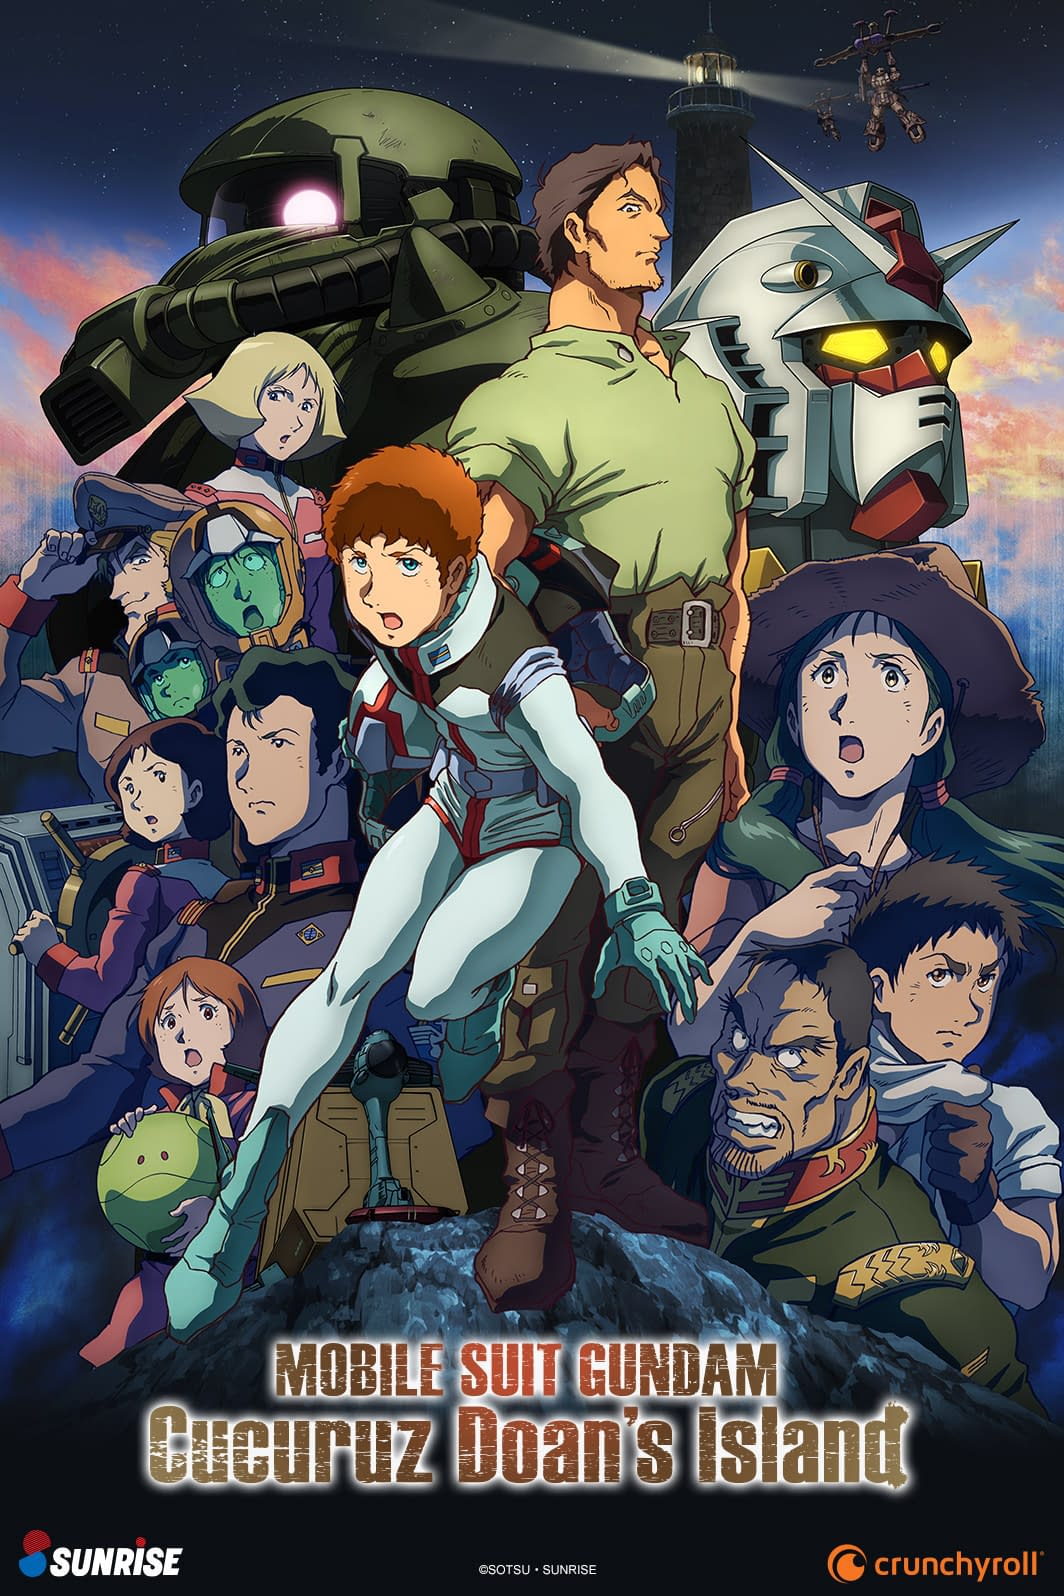 Digimon Adventure 02 The Beginning Anime Film Heads to U.S. Theaters -  Crunchyroll News